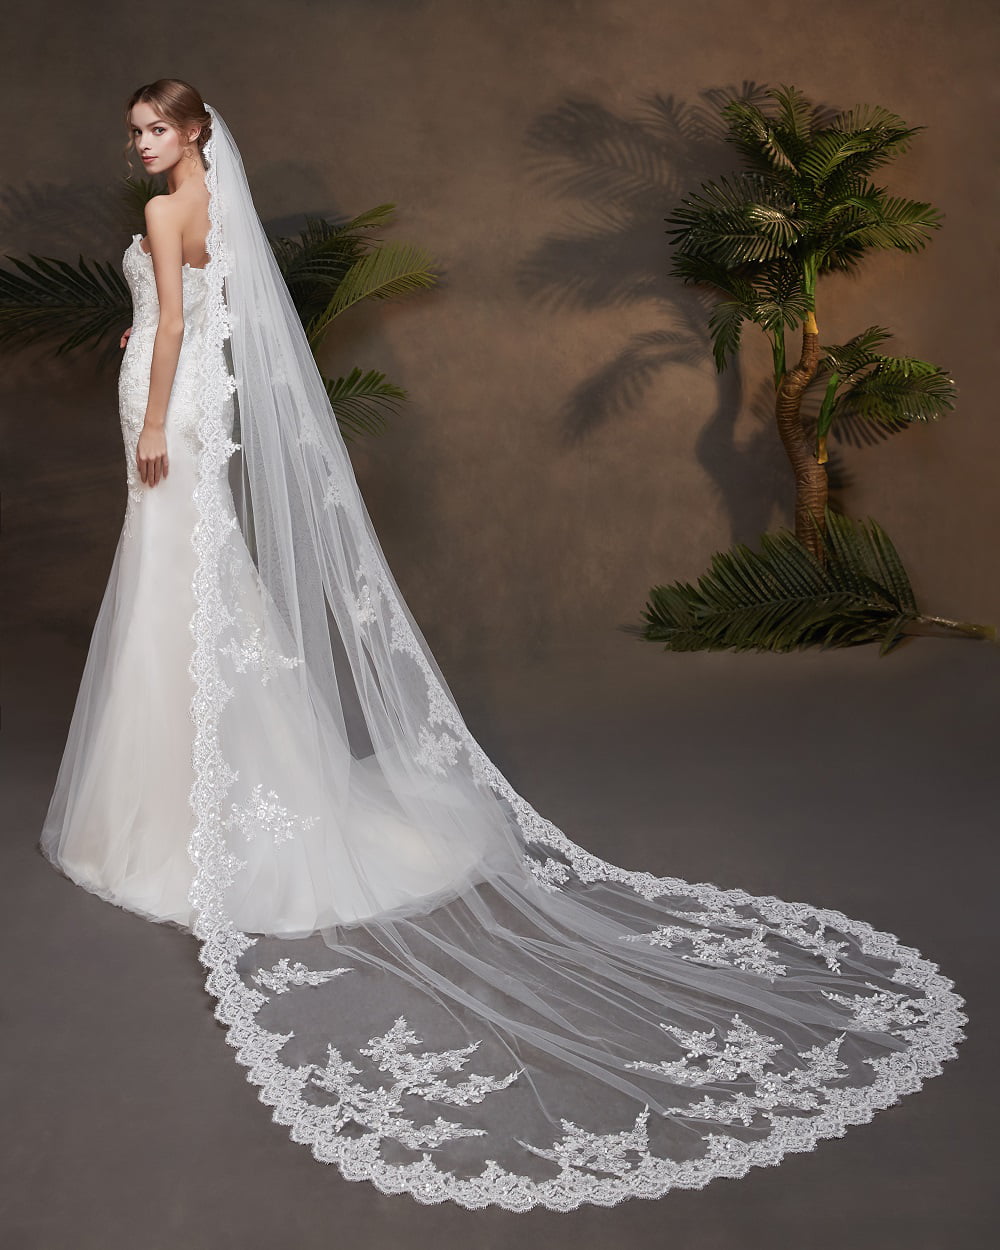 EllieHouse Women's Wedding Veils 1 Tier White Ivory 3m/4m/5m Lace Long Train Bridal Veil with Comb S114